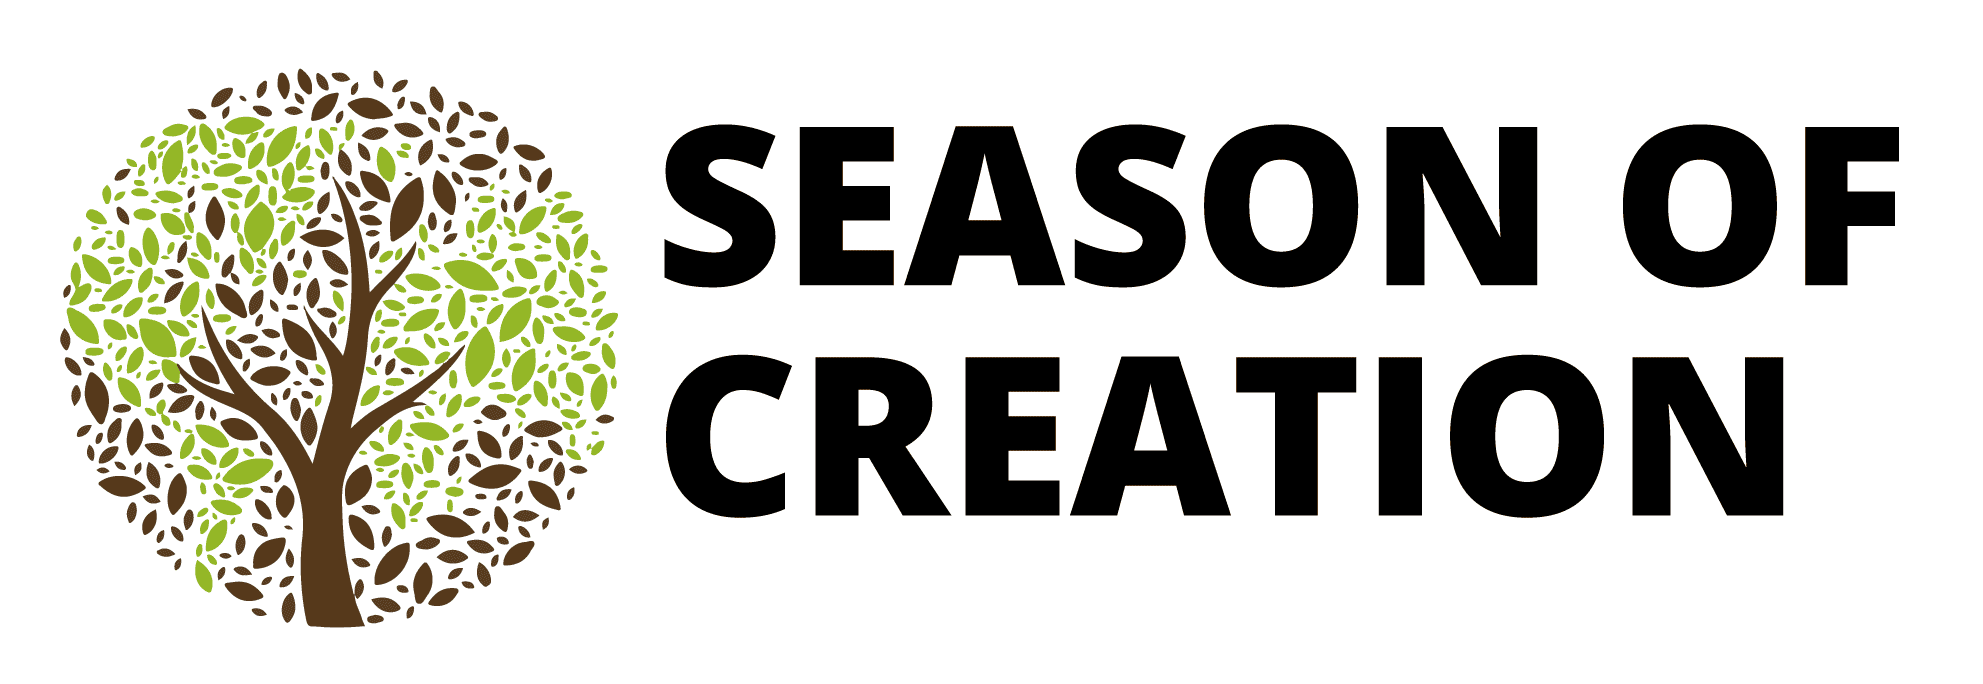 Season of Creation Worship Resources